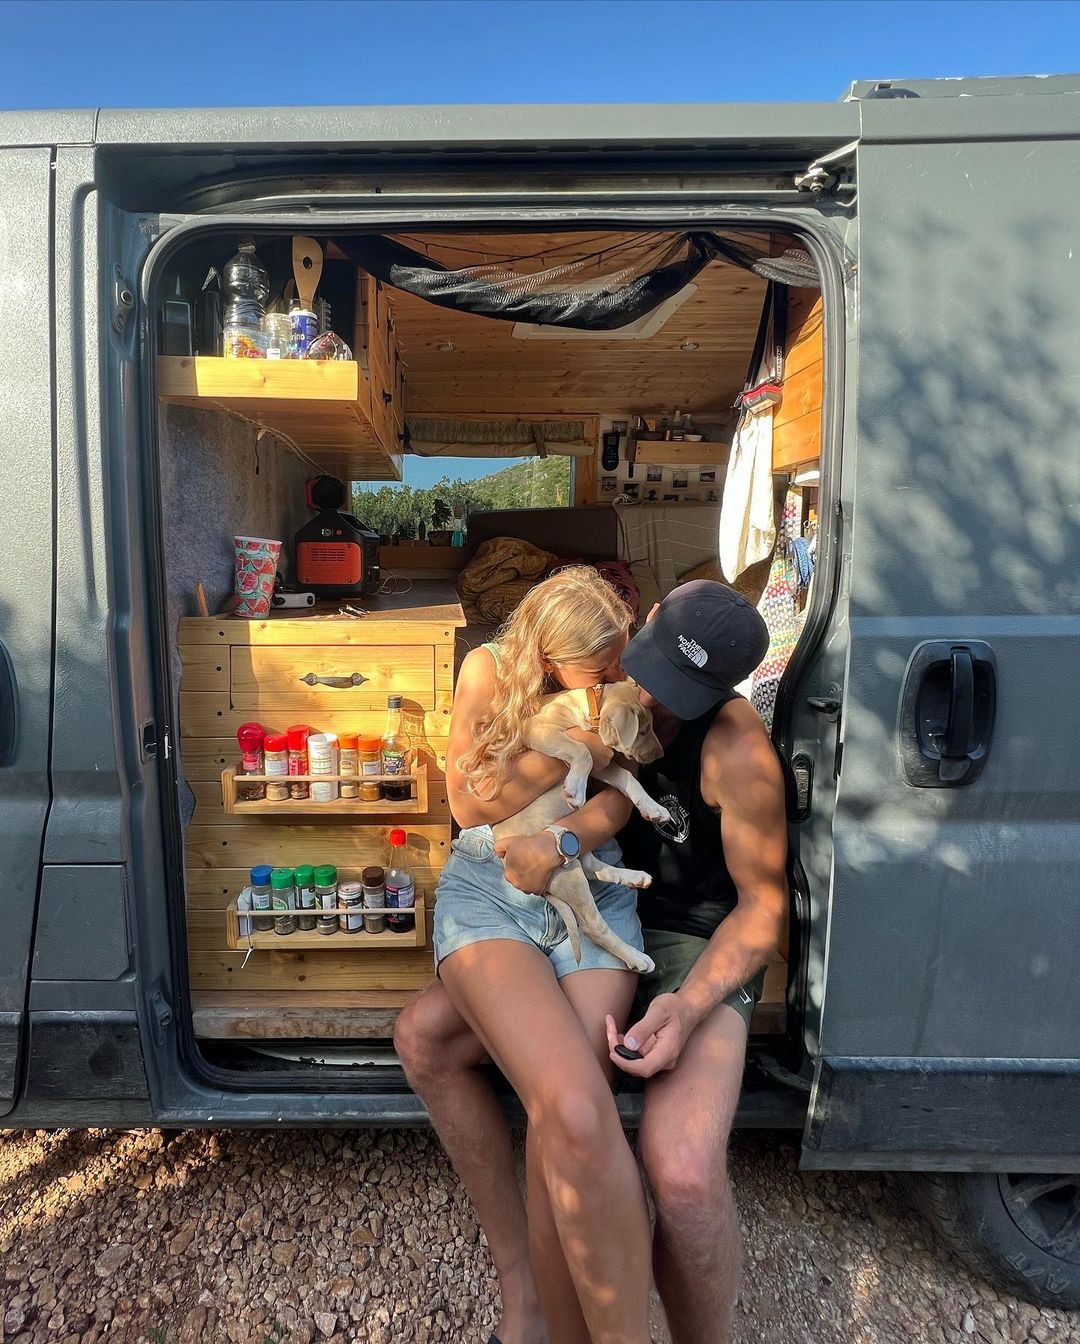 guy and girl in a van